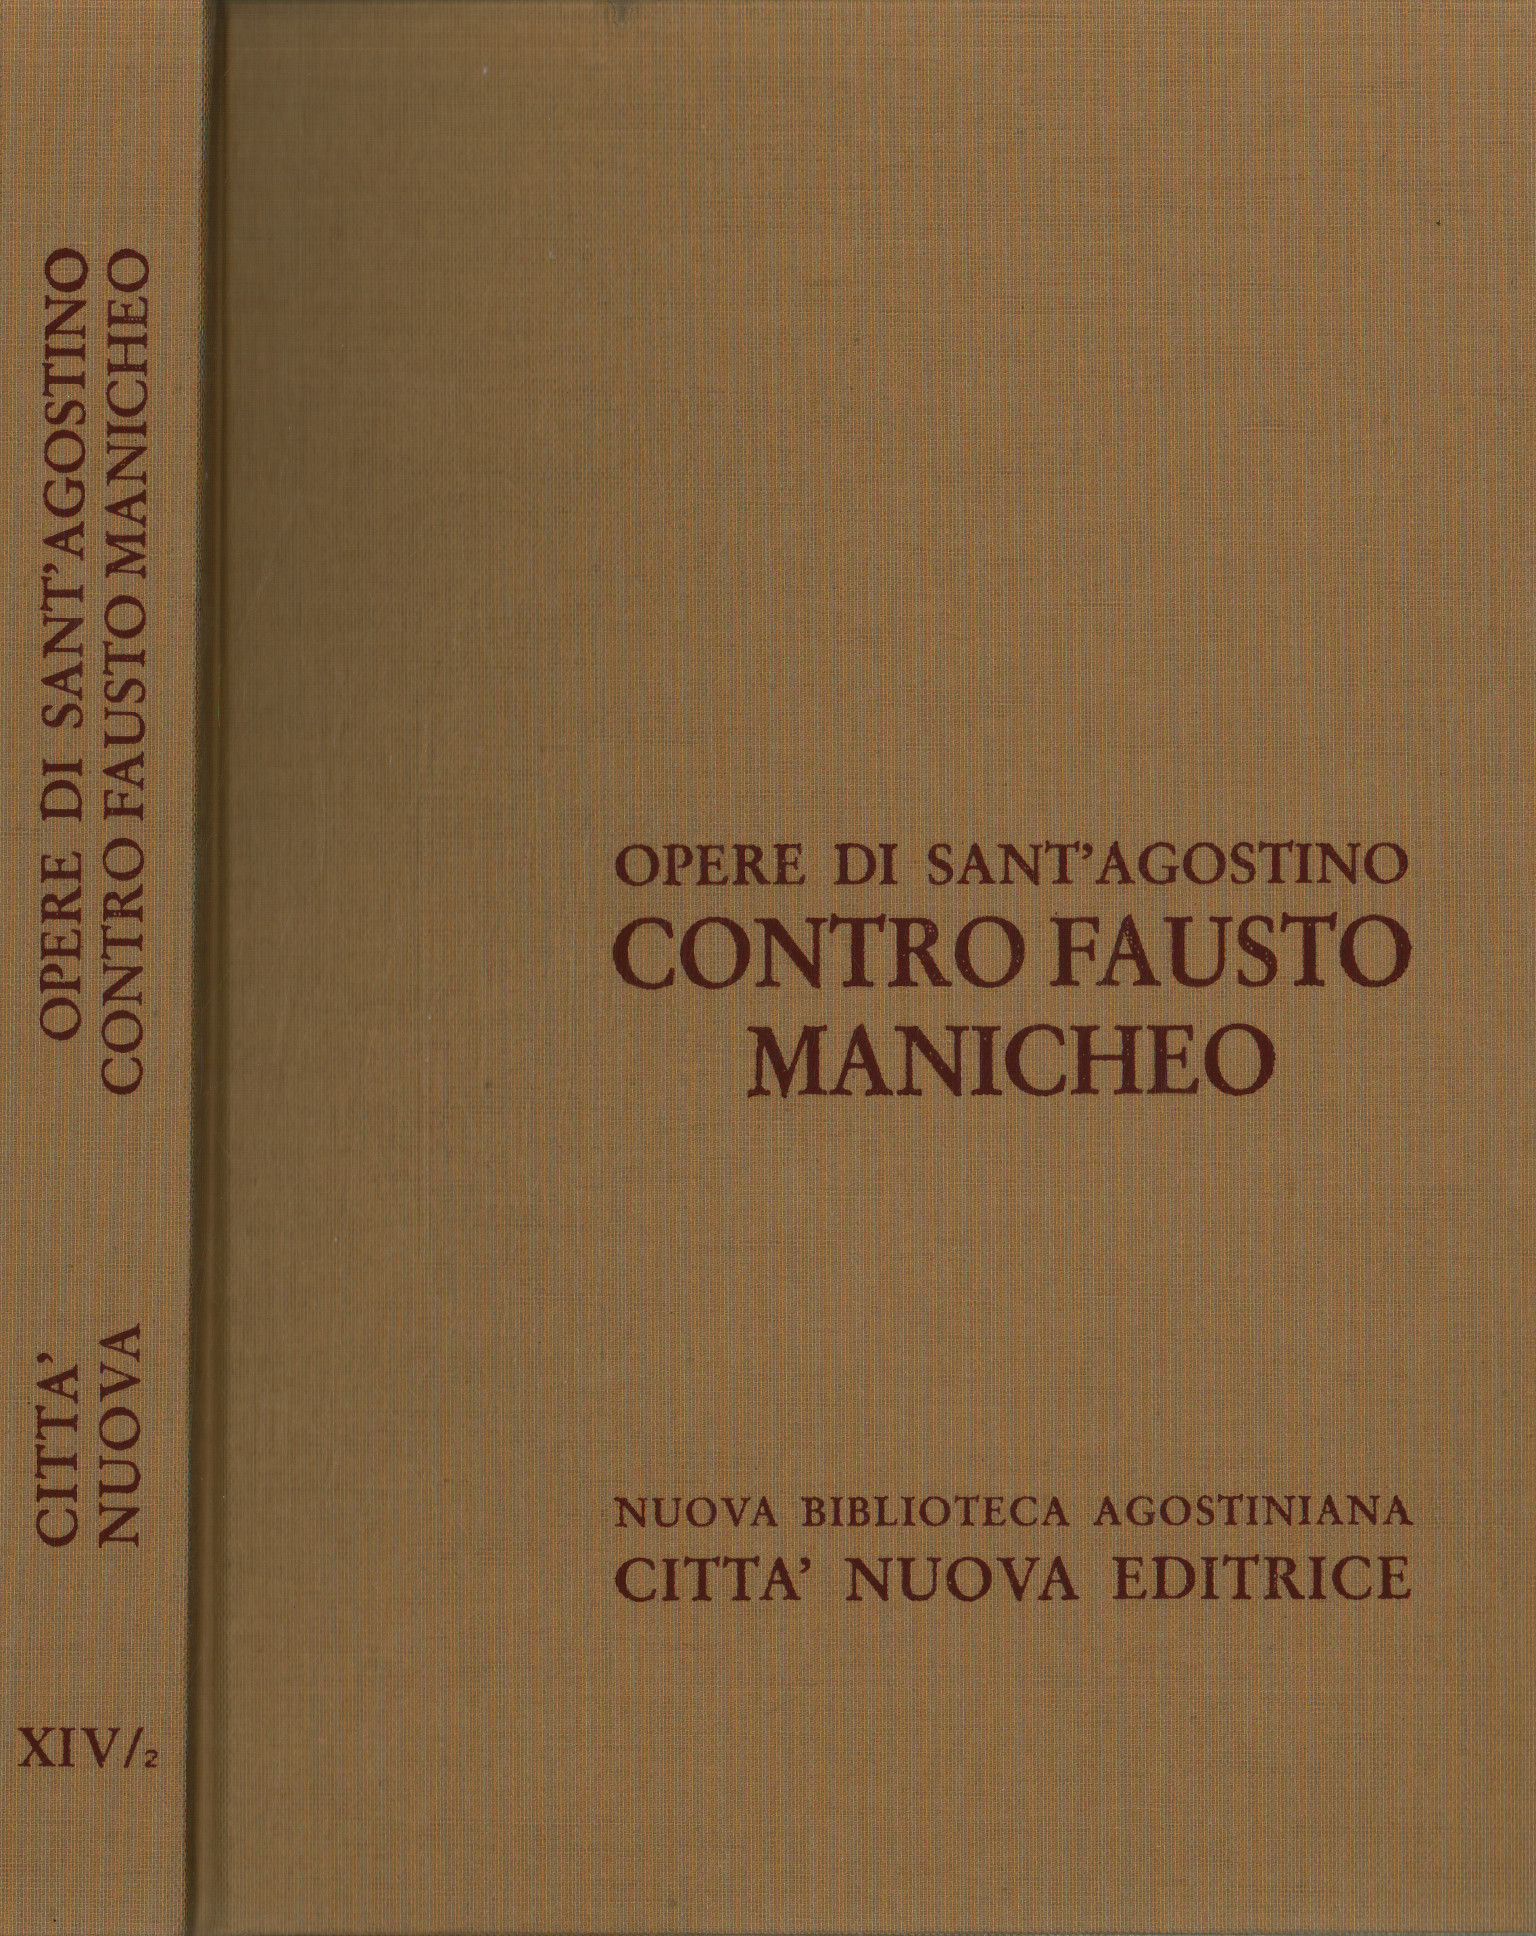 Works of Sant'Agostino. Versus